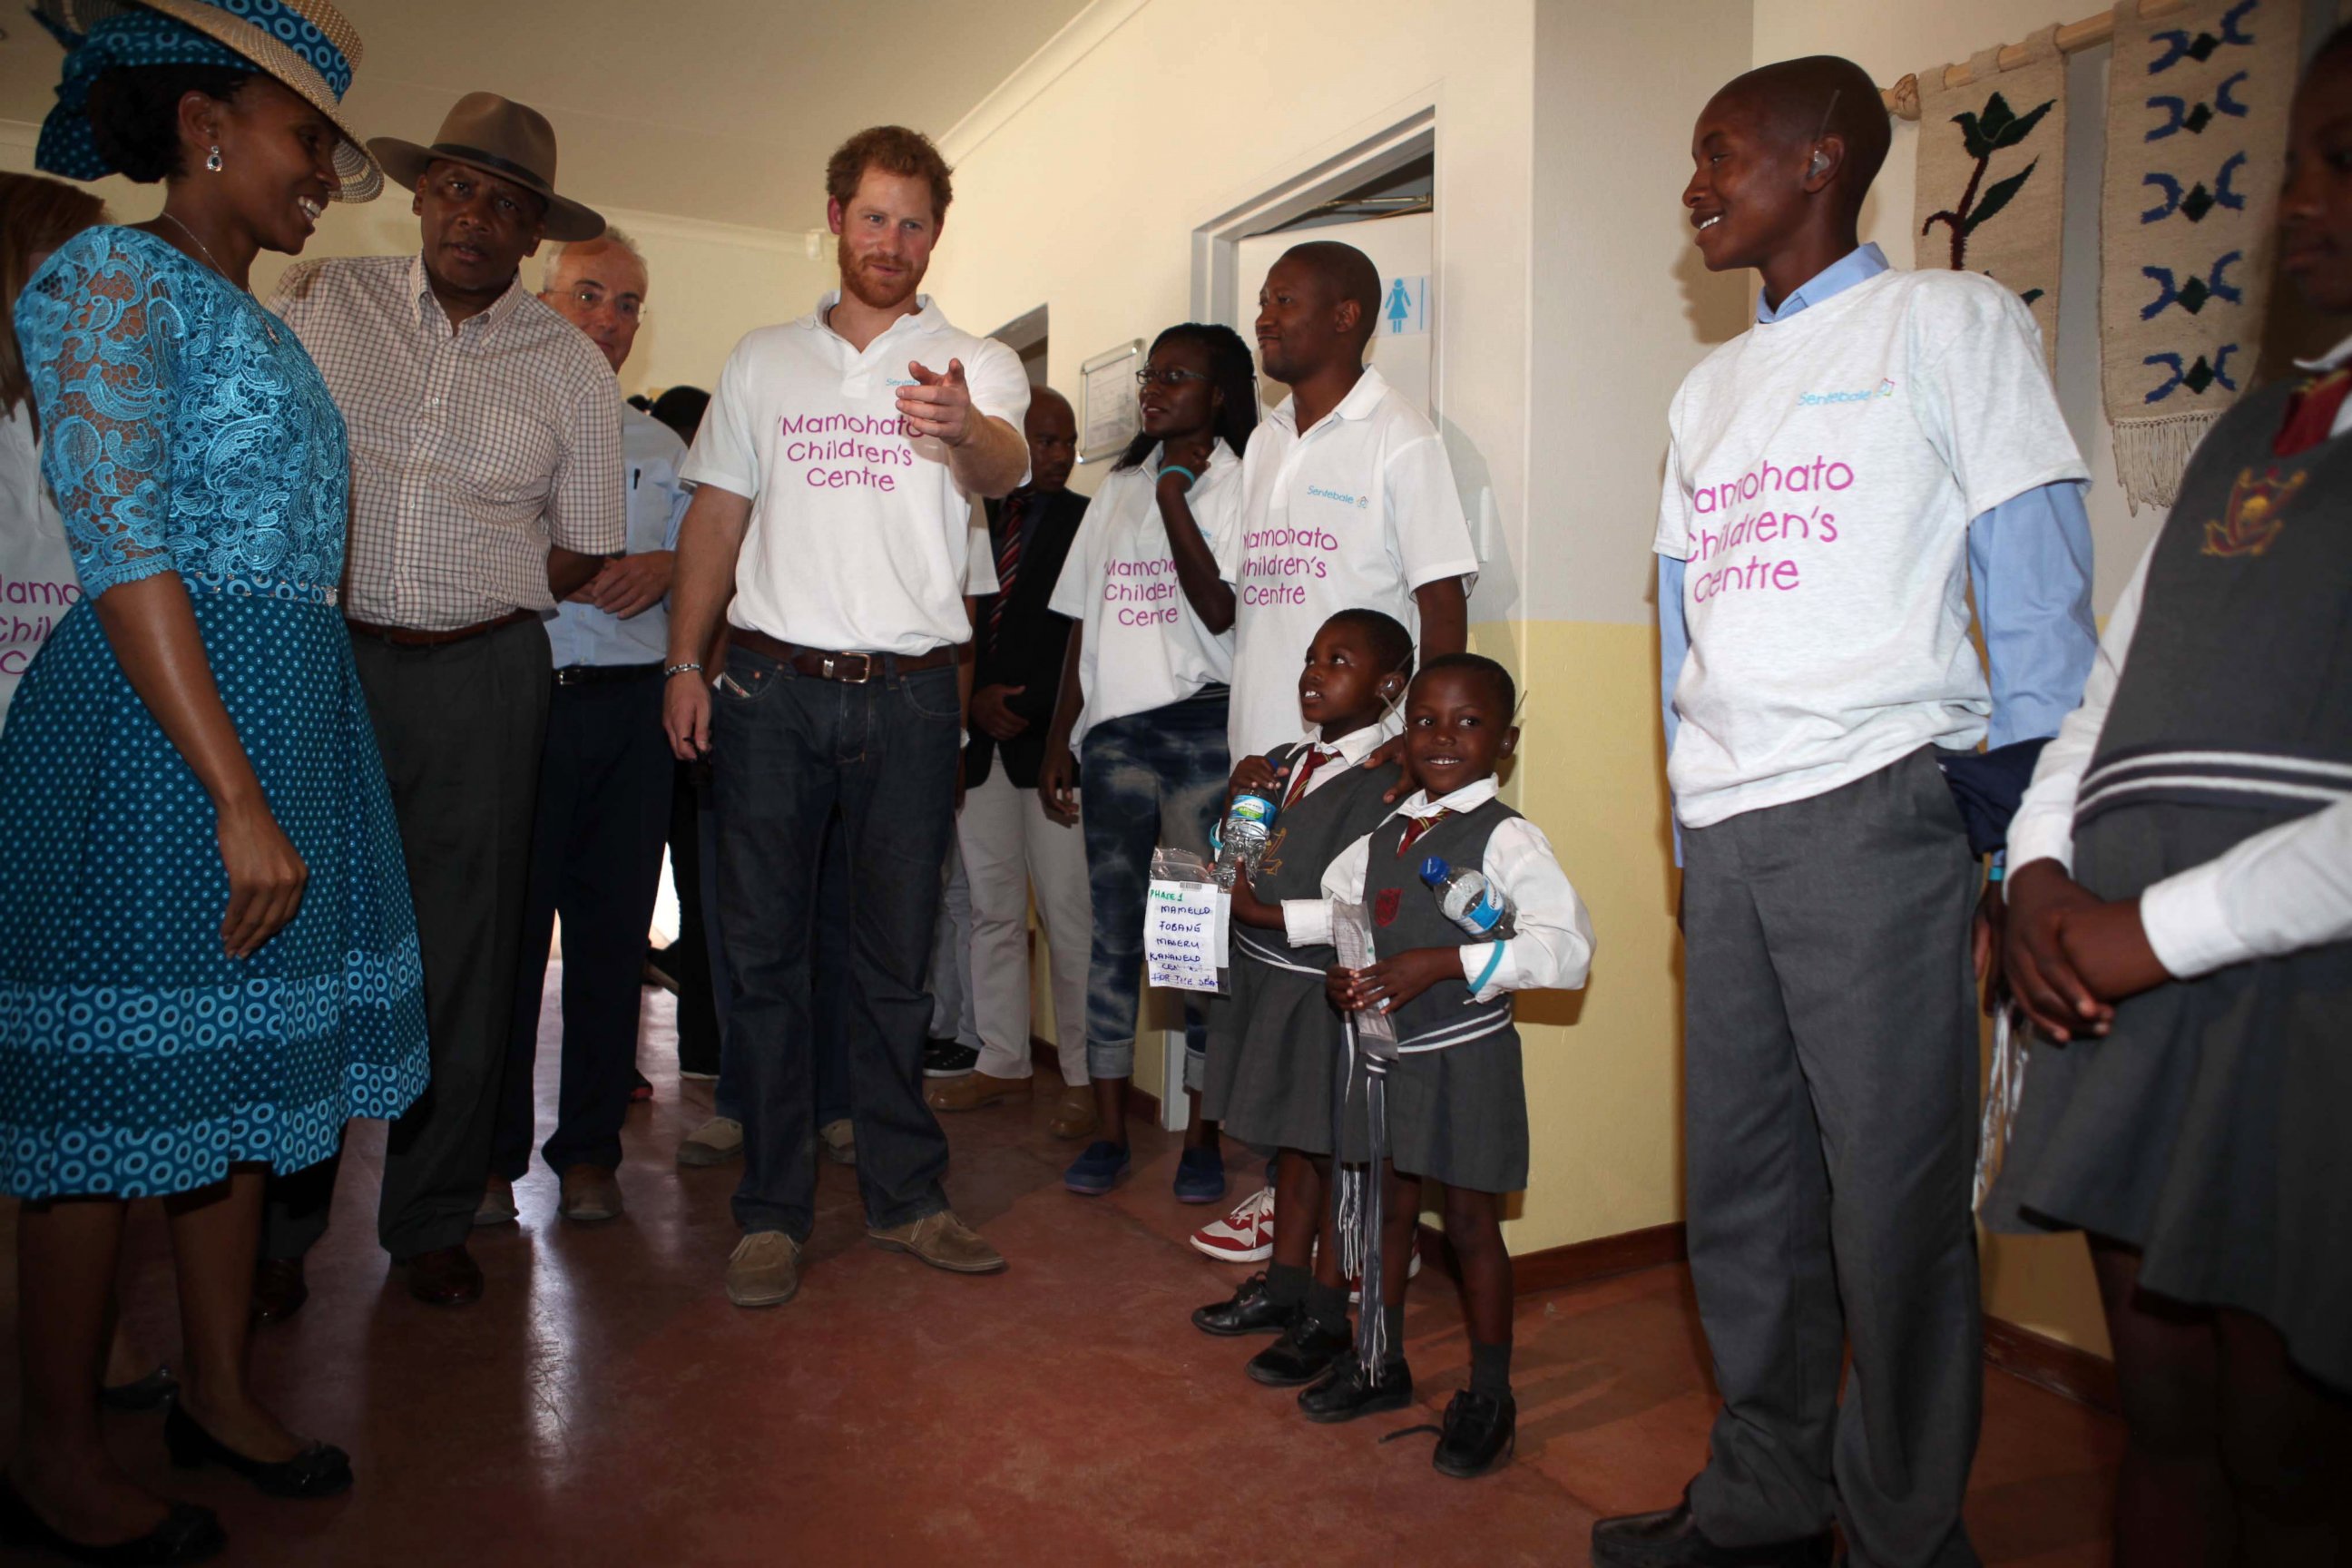 PHOTO: Children greet Prince Harry as he visits the Sentebale charity on Nov. 26, 2015 in Maeru, Lesotho, Sentebale.